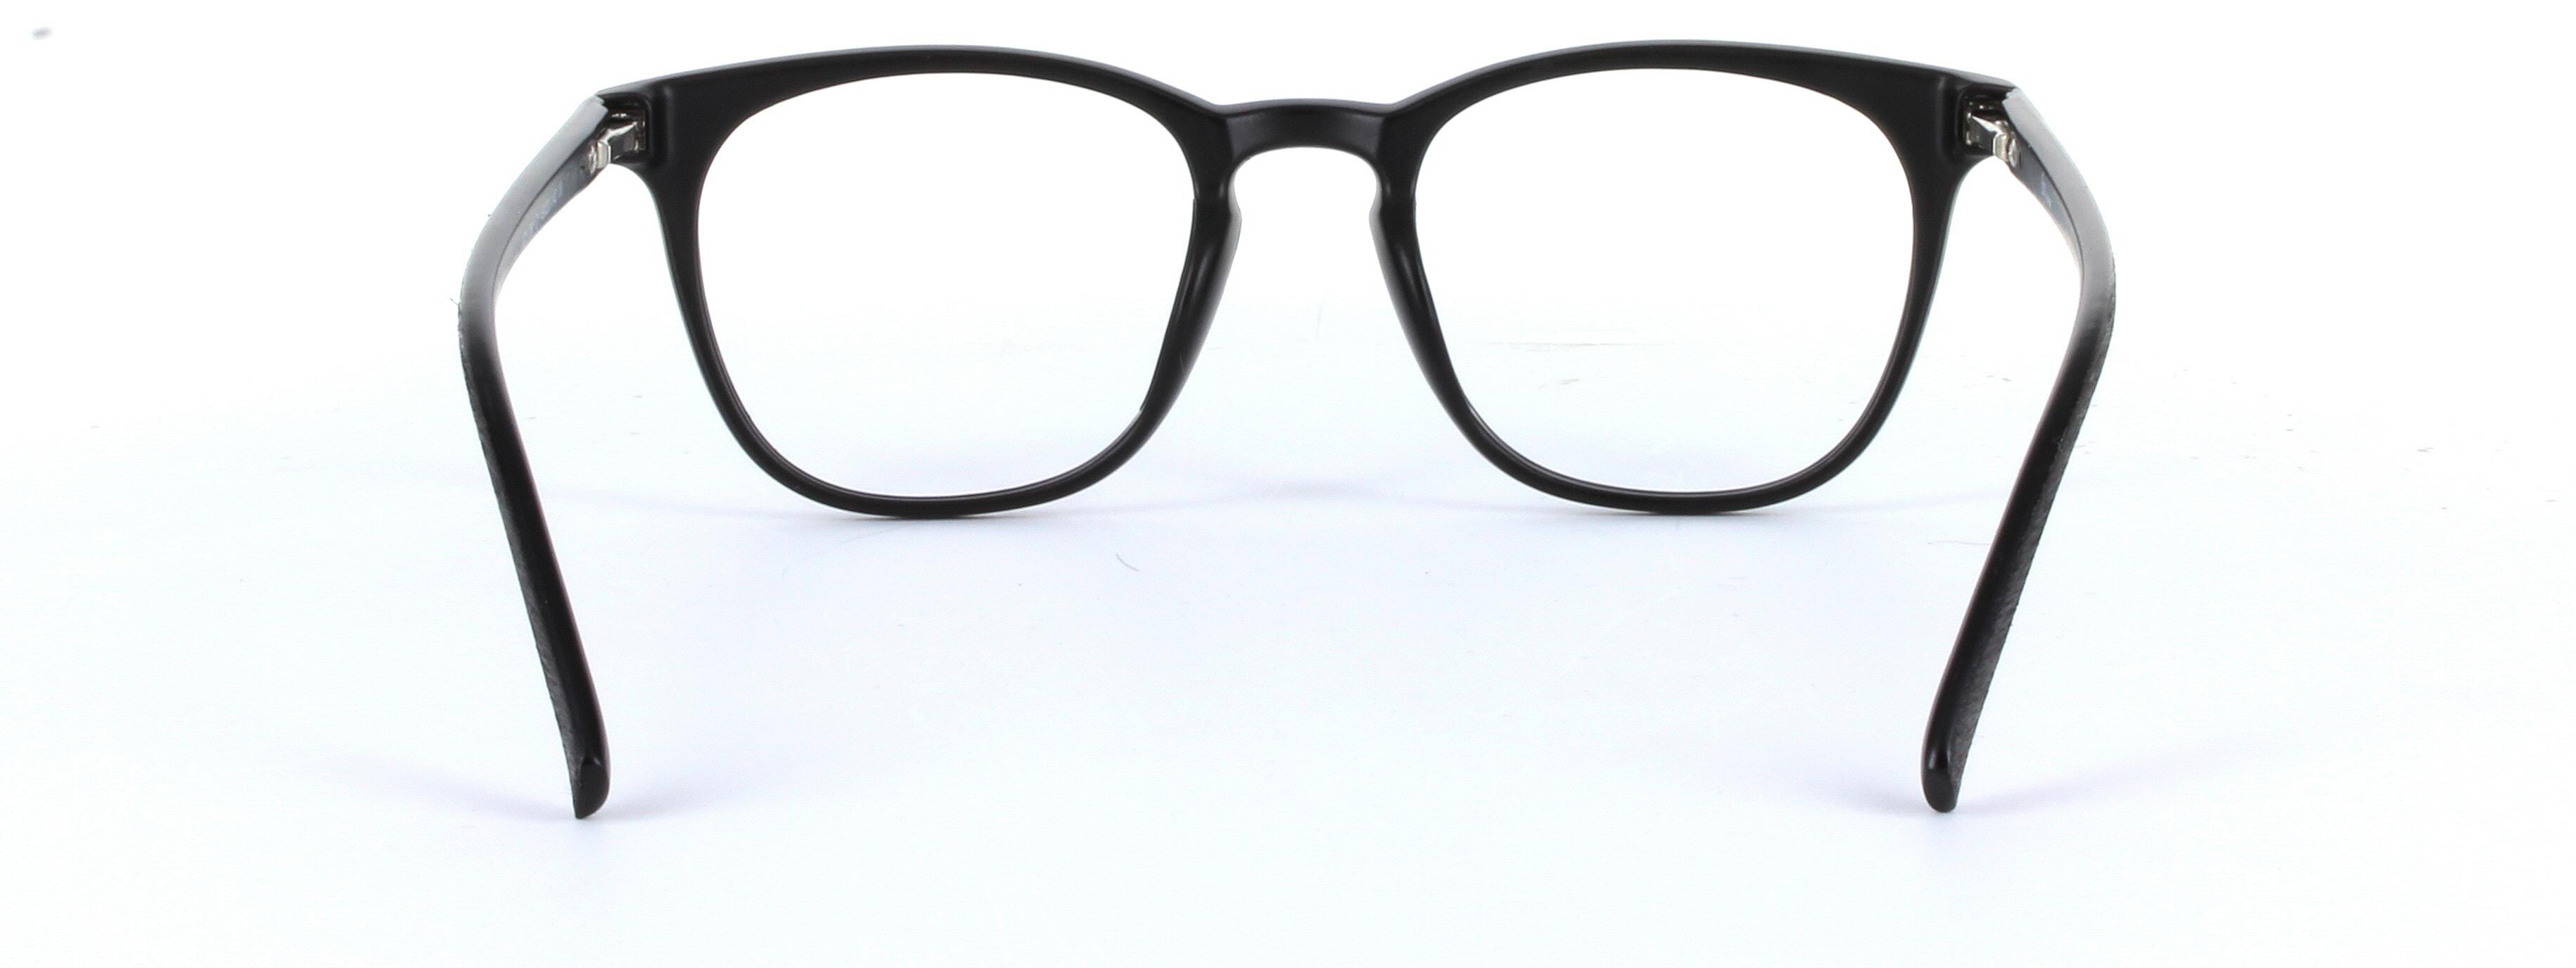 Aubrey Black Full Rim Oval Round Plastic Glasses - Image View 3